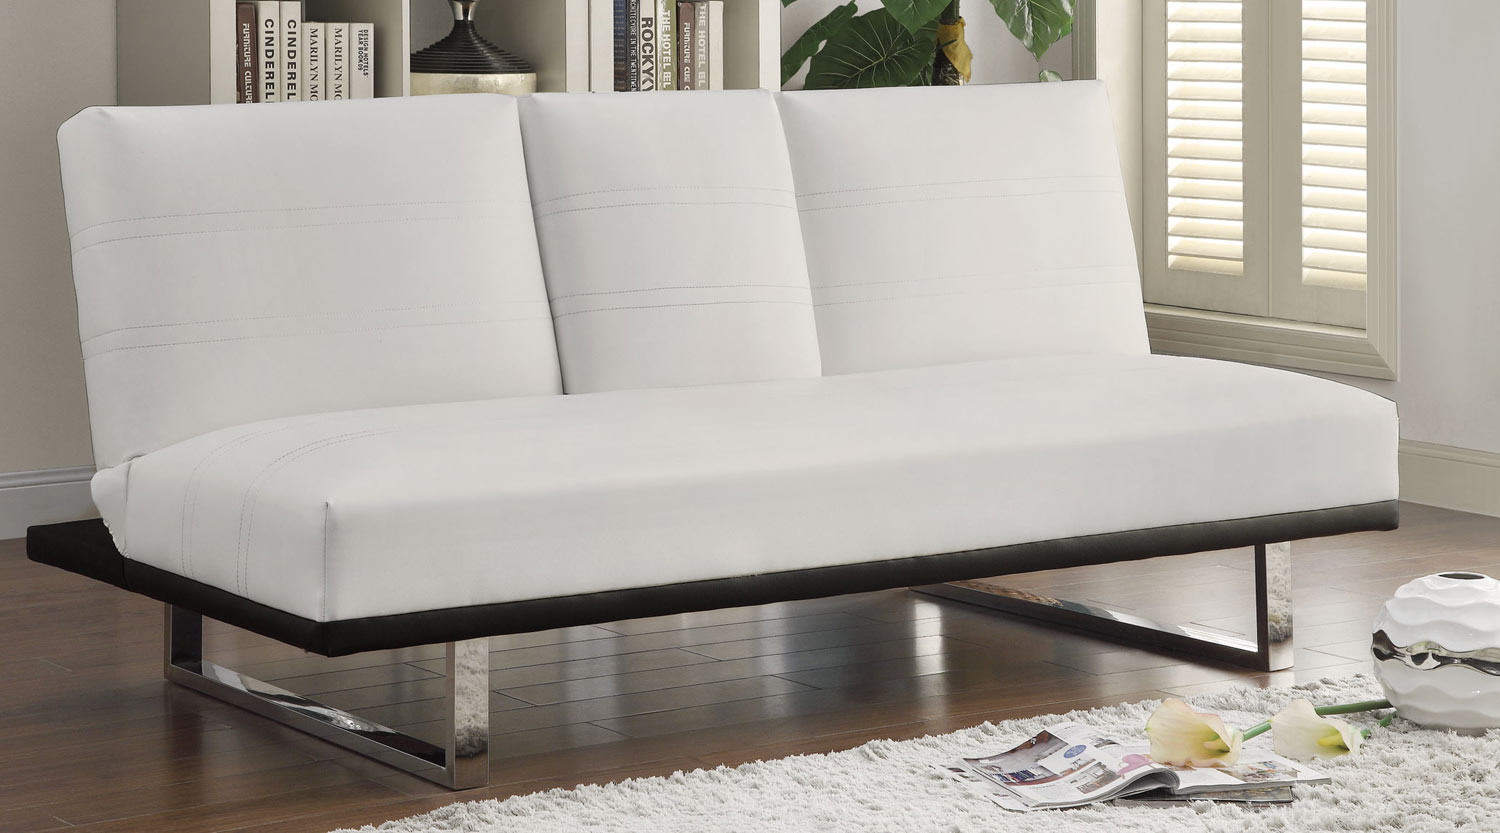 Coaster 500030 Sofa Bed - White